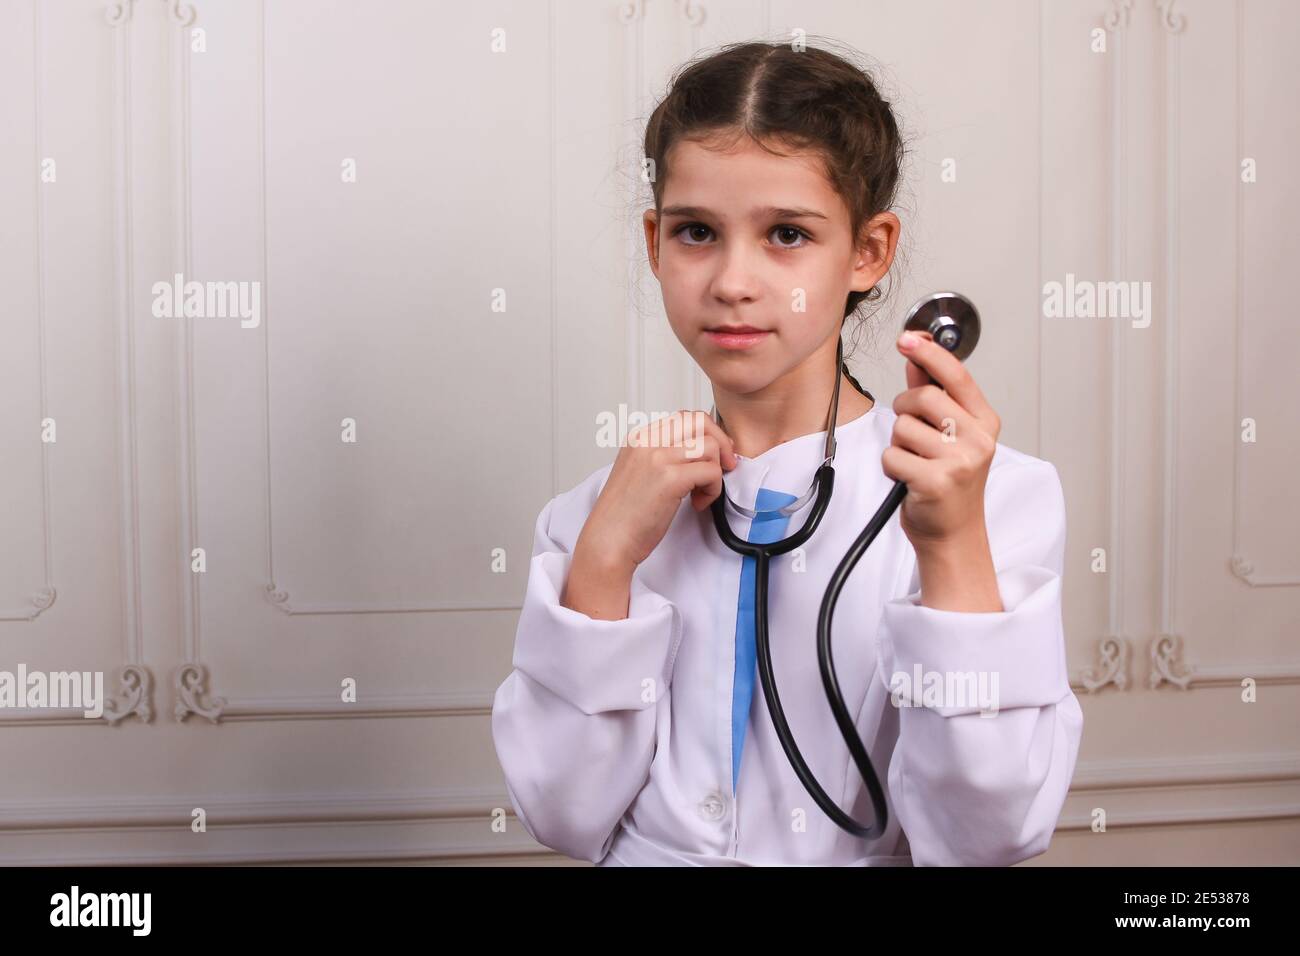 Carino bambina con stetoscopio, lei giocando medico. Foto Stock